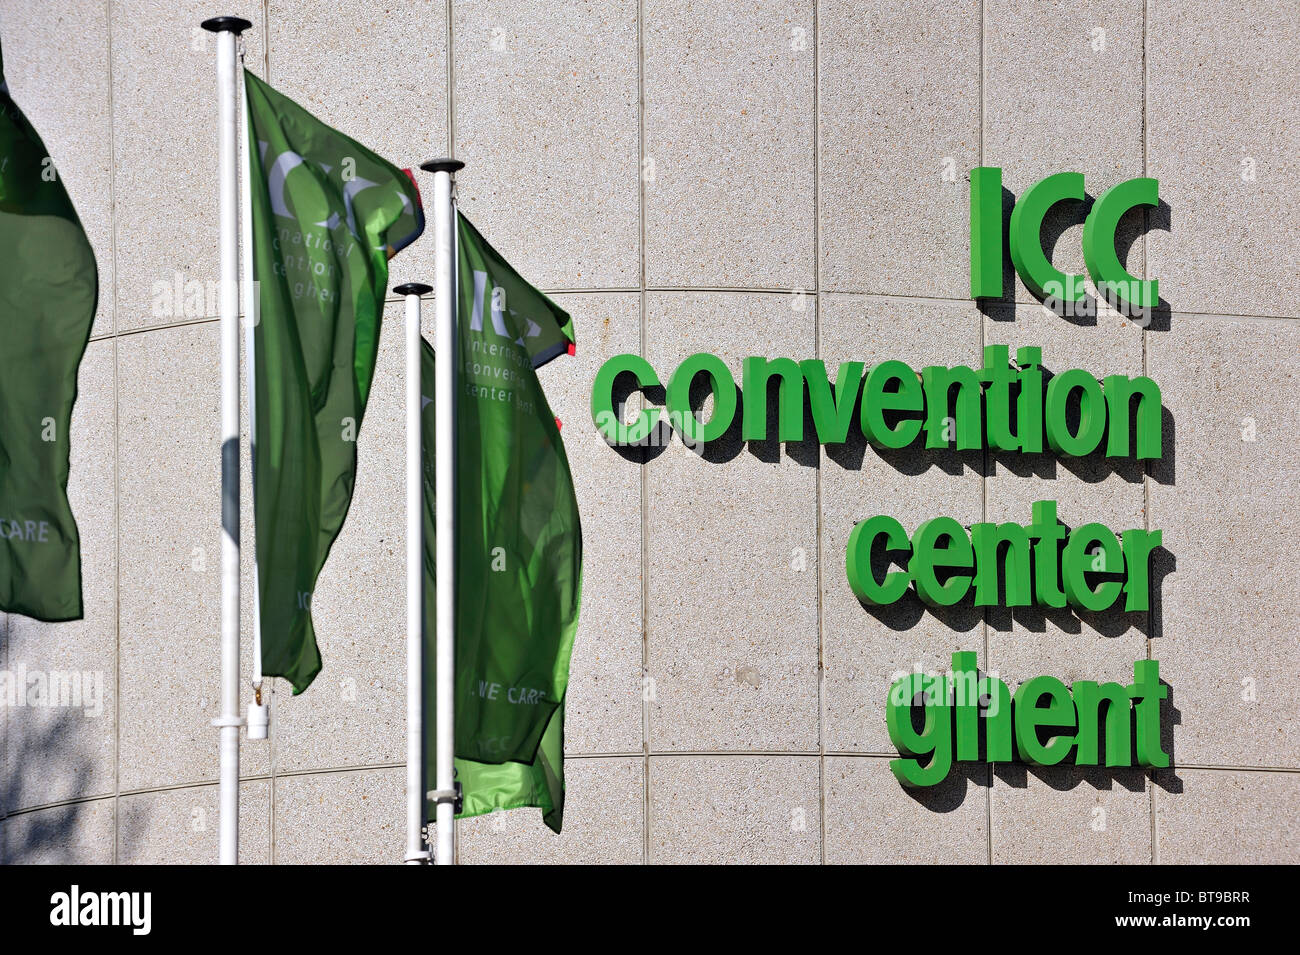 The ICC International Convention Center Ghent, Belgium Stock Photo